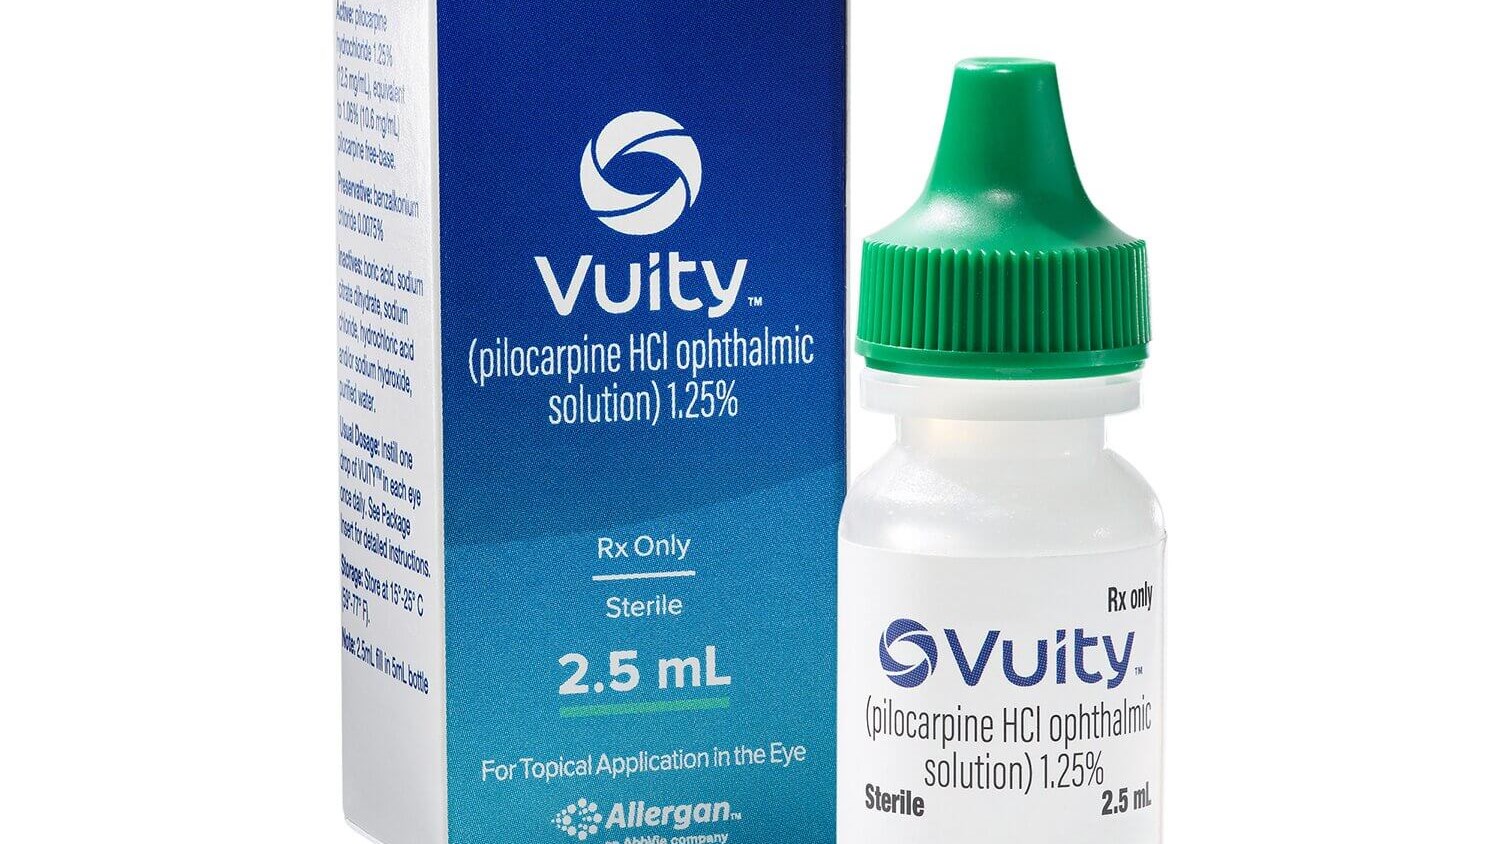 Vuity Eye Drops bottle and carton